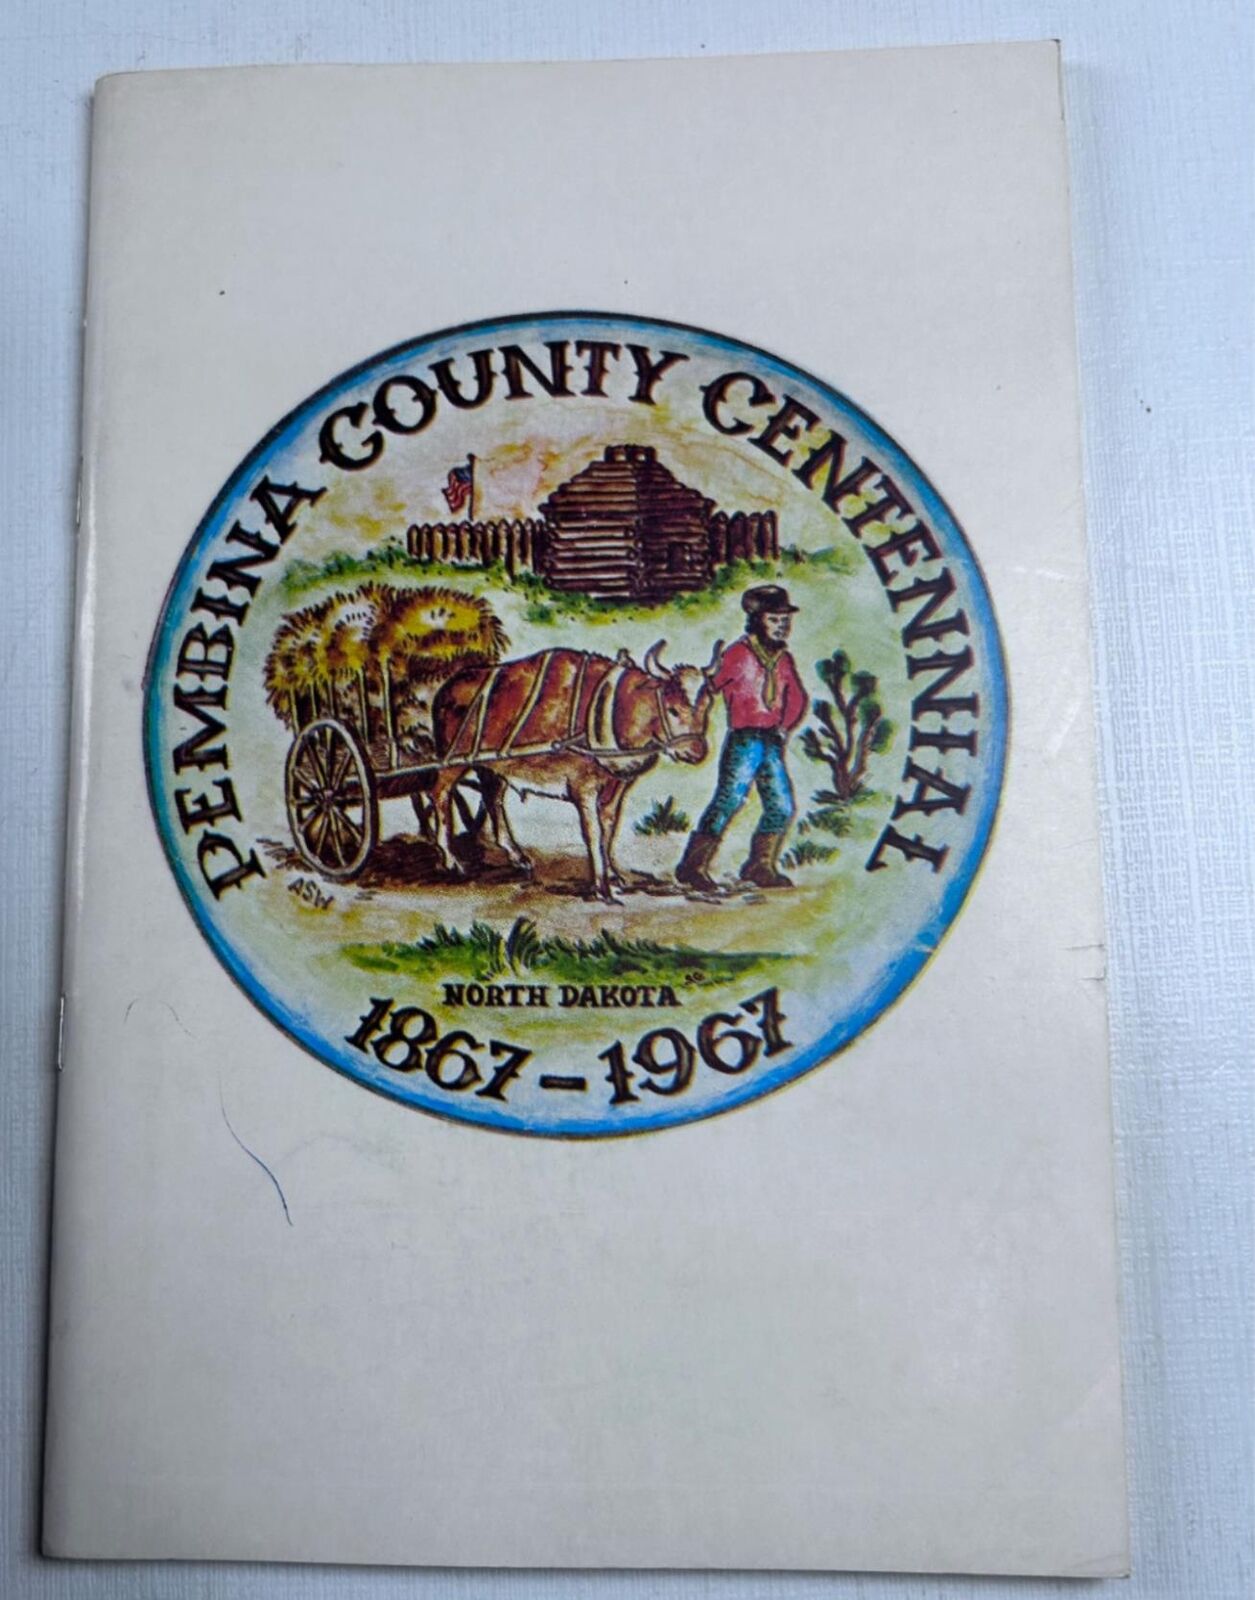 A History of Pembina County North Dakota 1867-1967